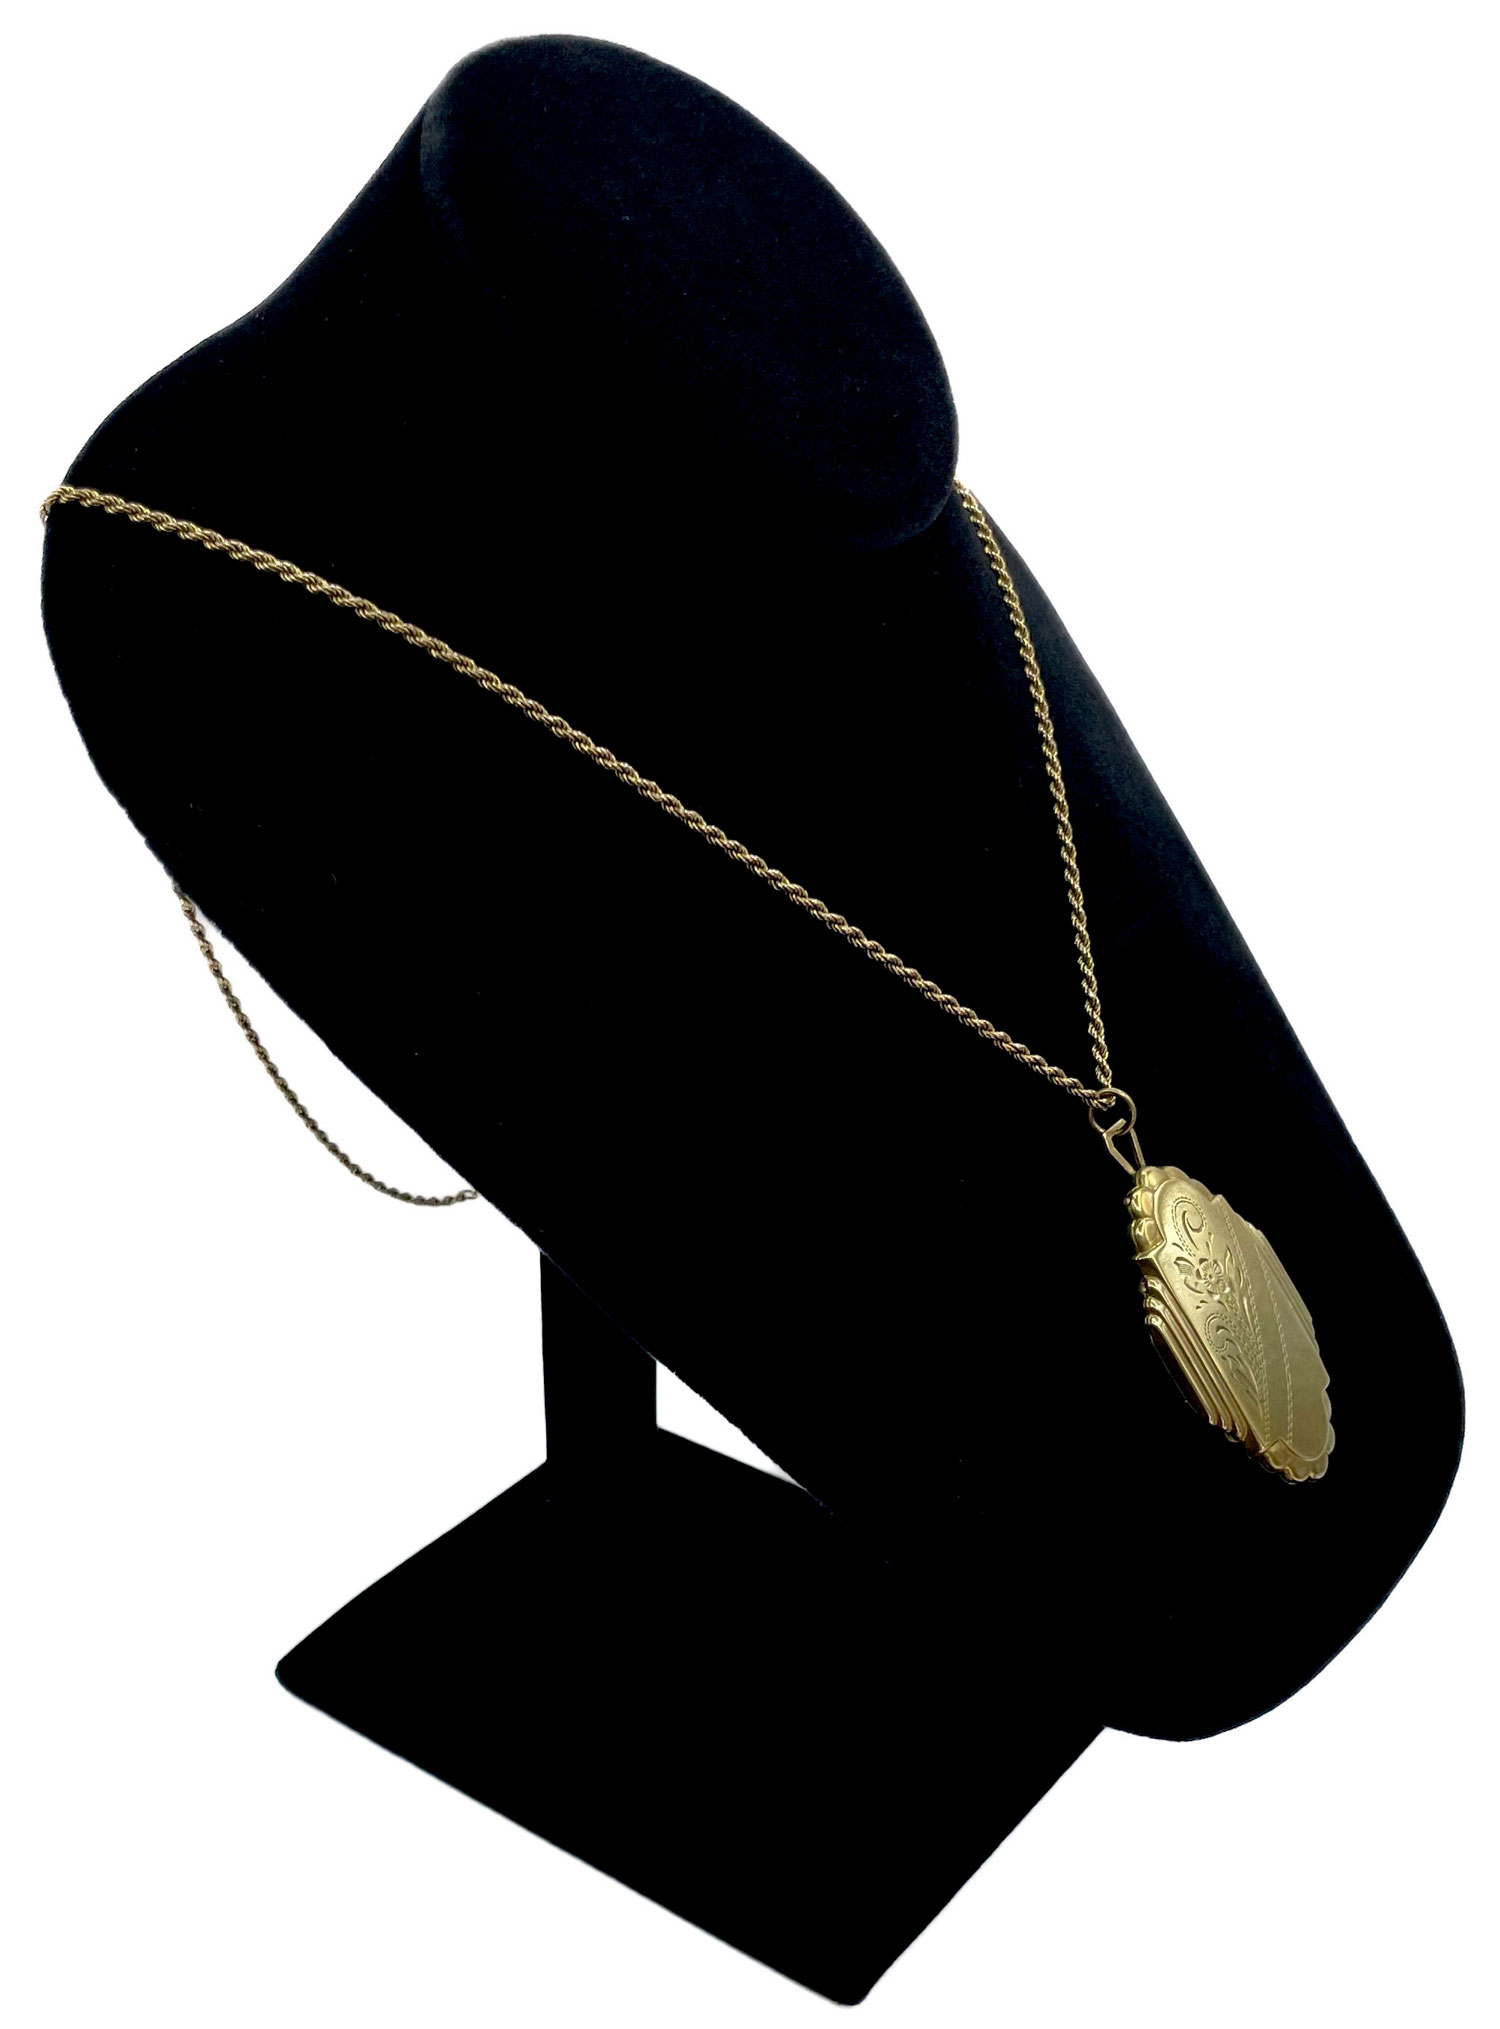 Art Deco locket pendant necklace